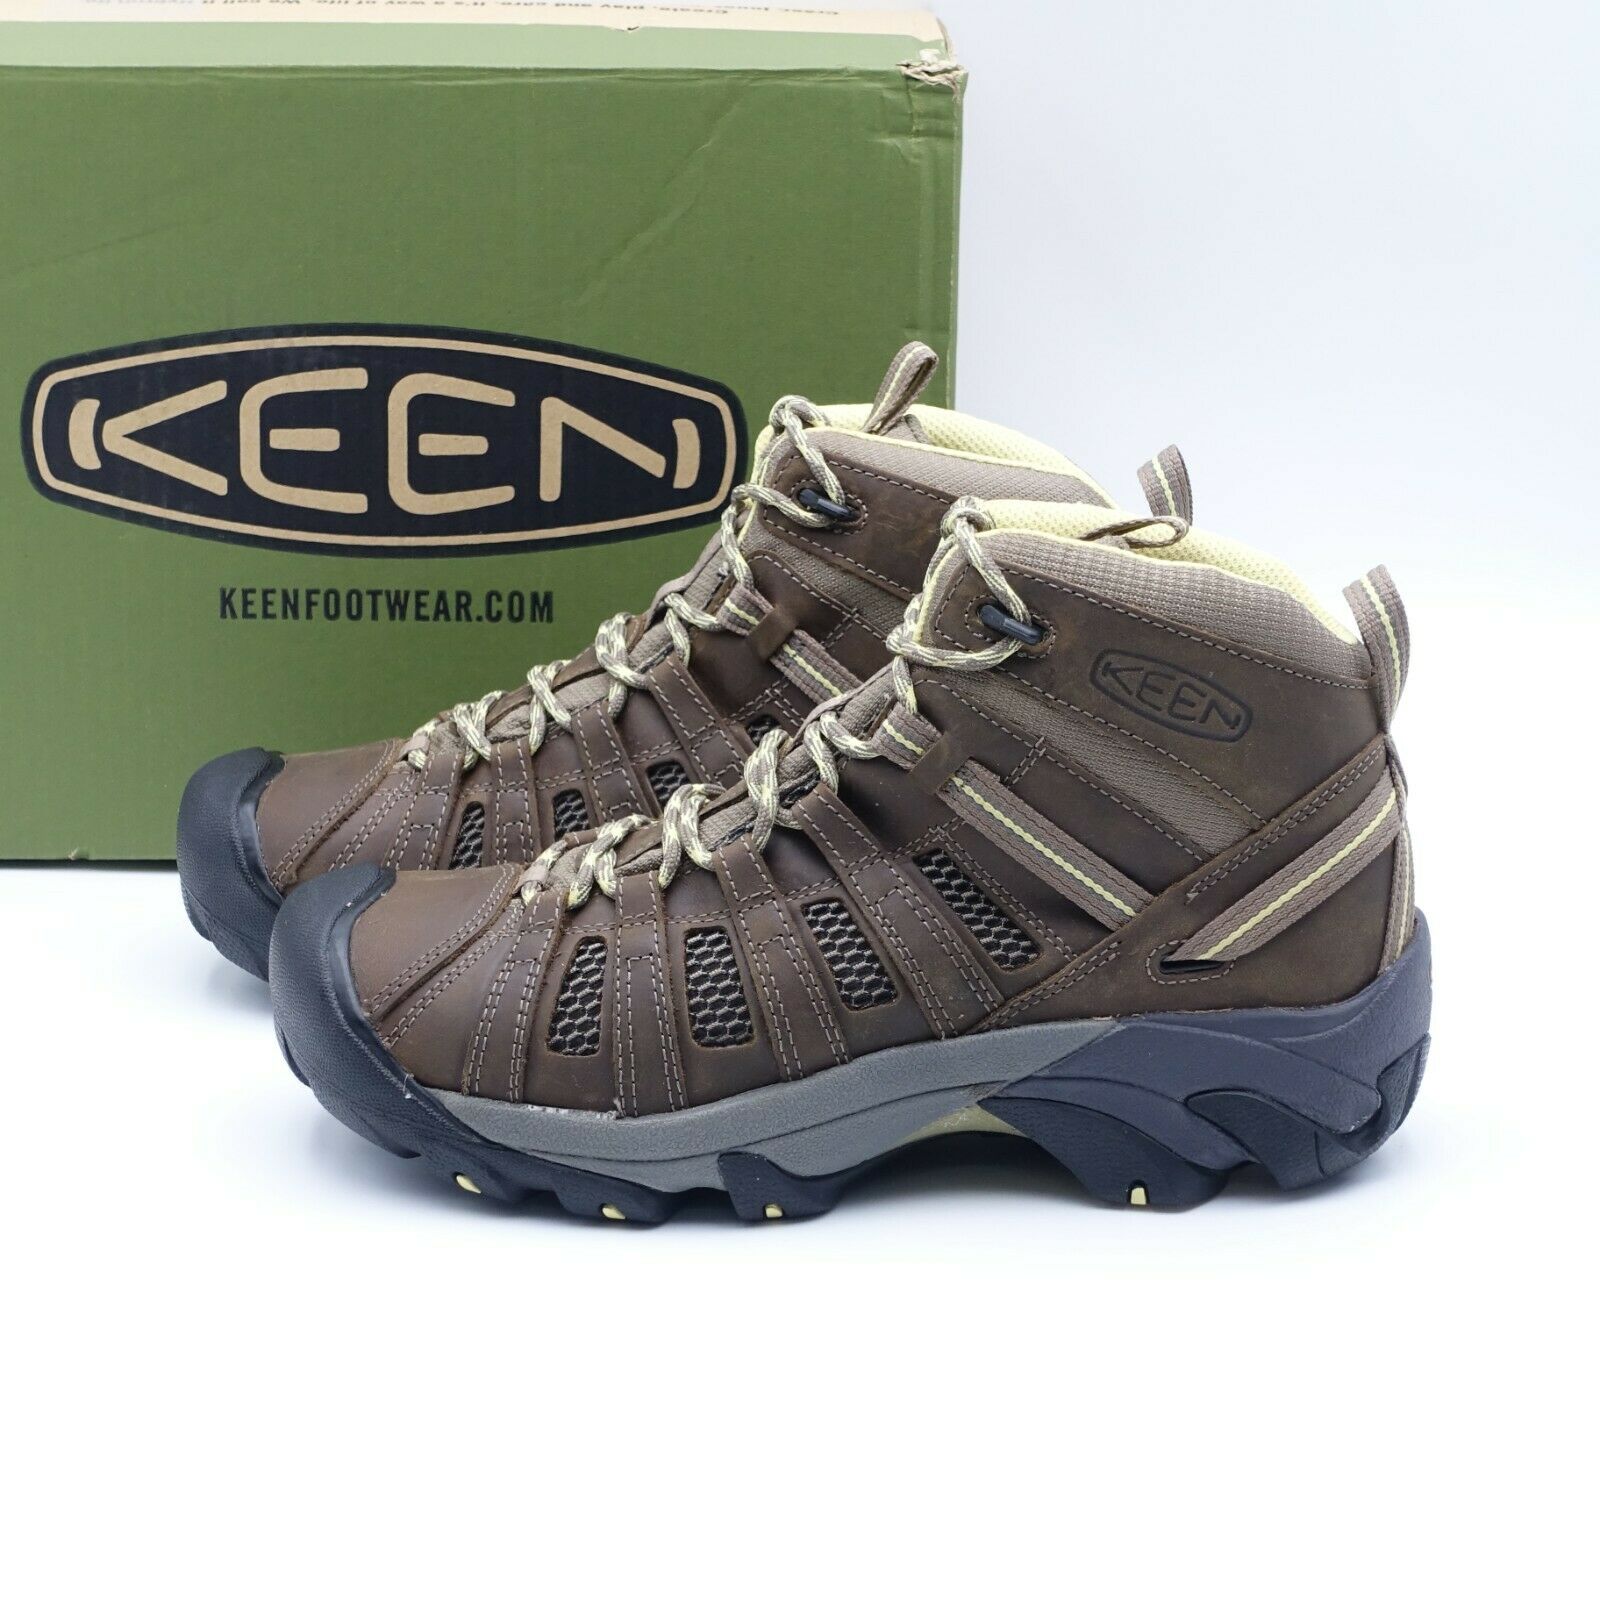 Size 11 Women's / 9.5 Men's KEEN Voyageur Mid Hiking Boots 1010138 Brindle Brown